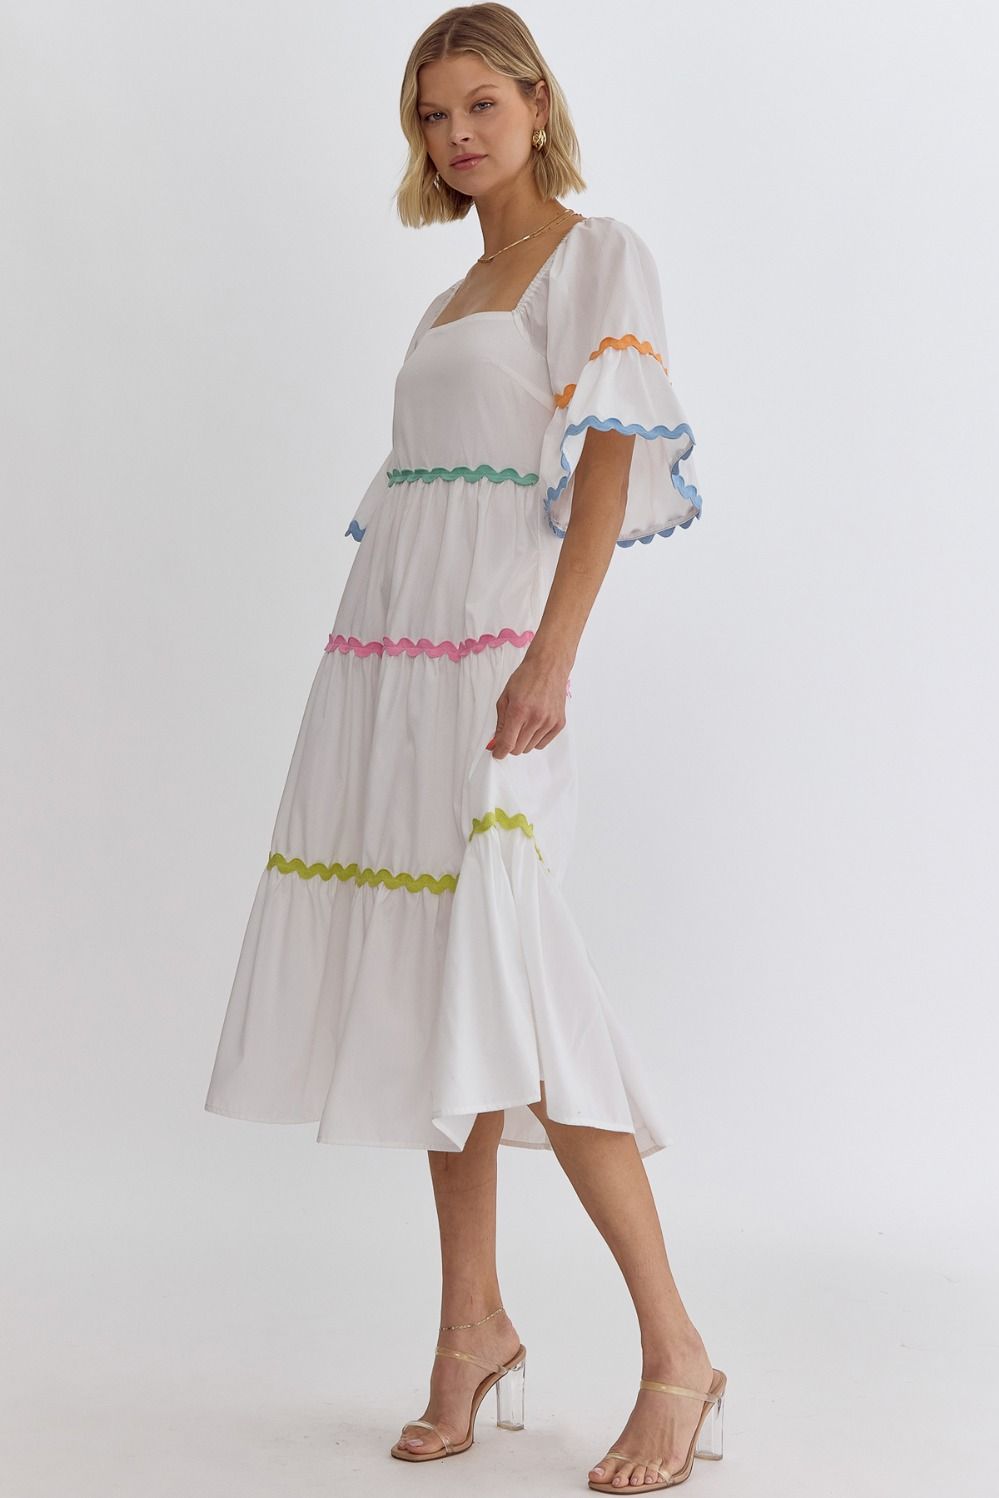 ENTRO INC Women's Dresses Solid Square-Neck Half Sleeve Midi Dress || David's Clothing